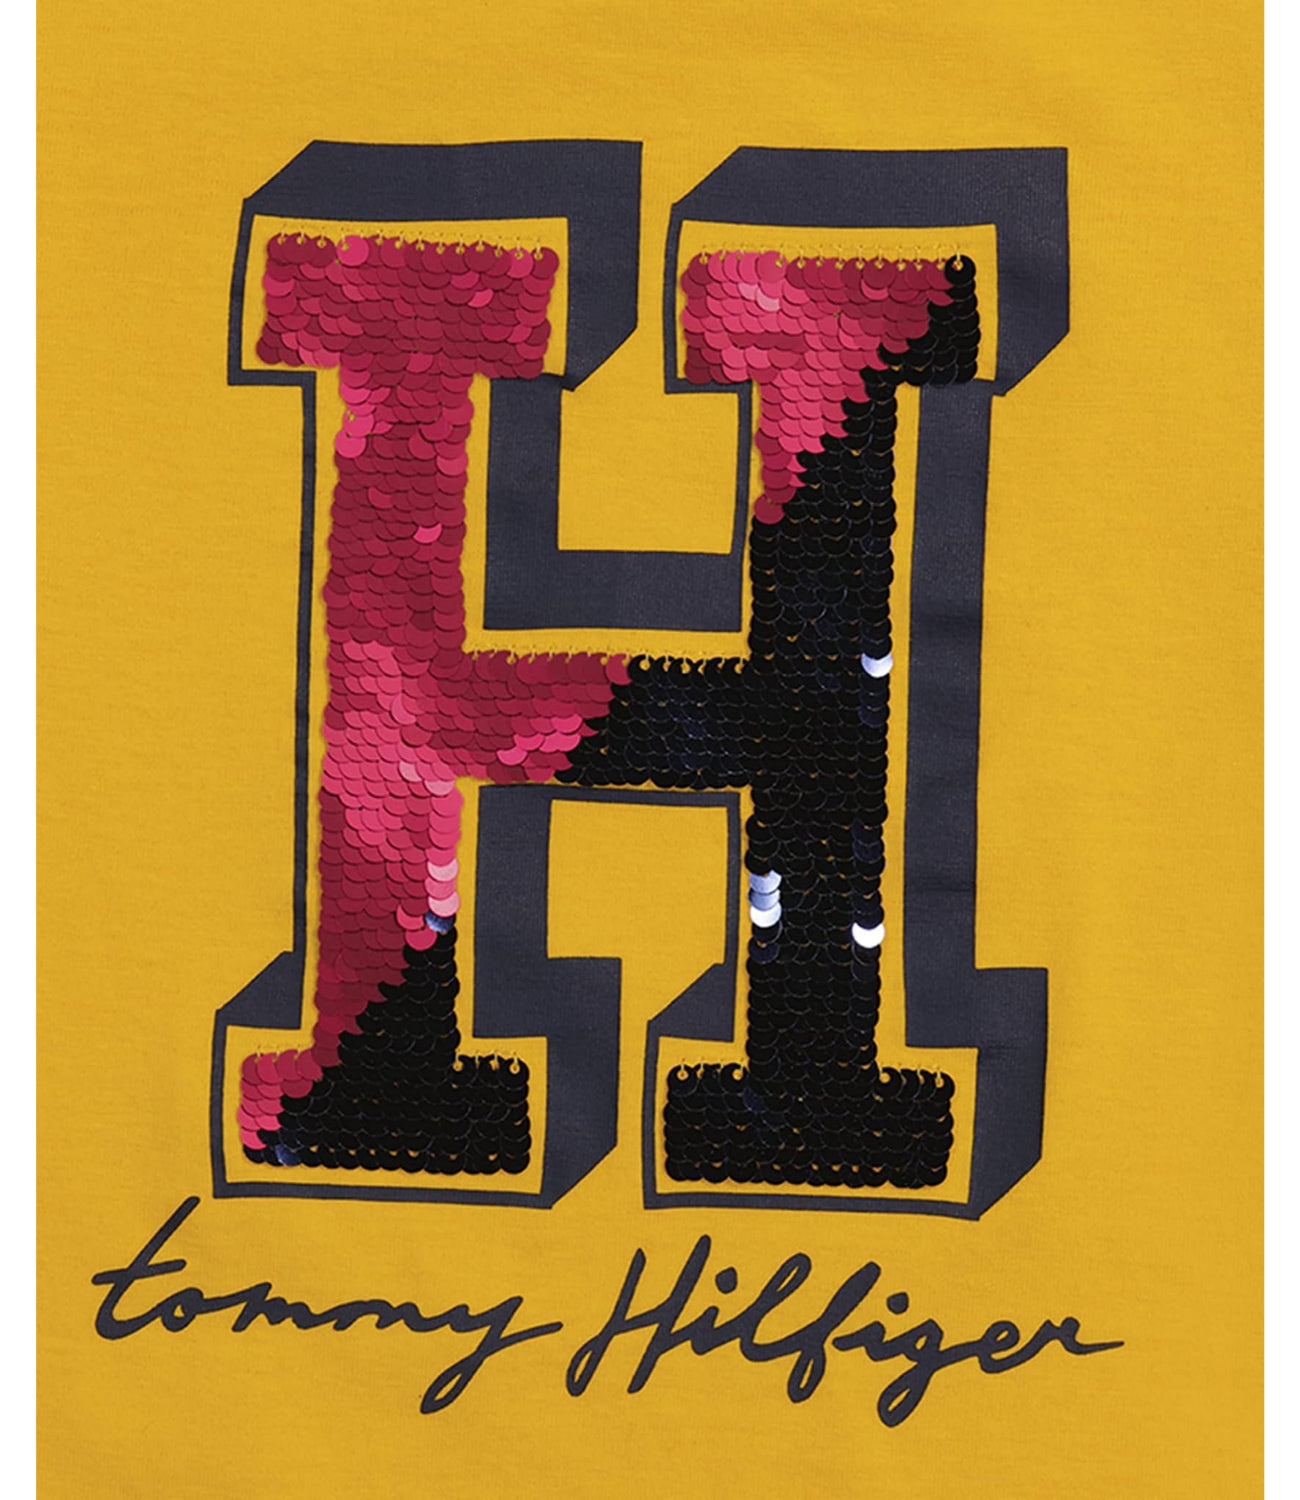 Tommy Hilfiger Girls 7-16 Short Sleeve Split H Sequin T-Shirt